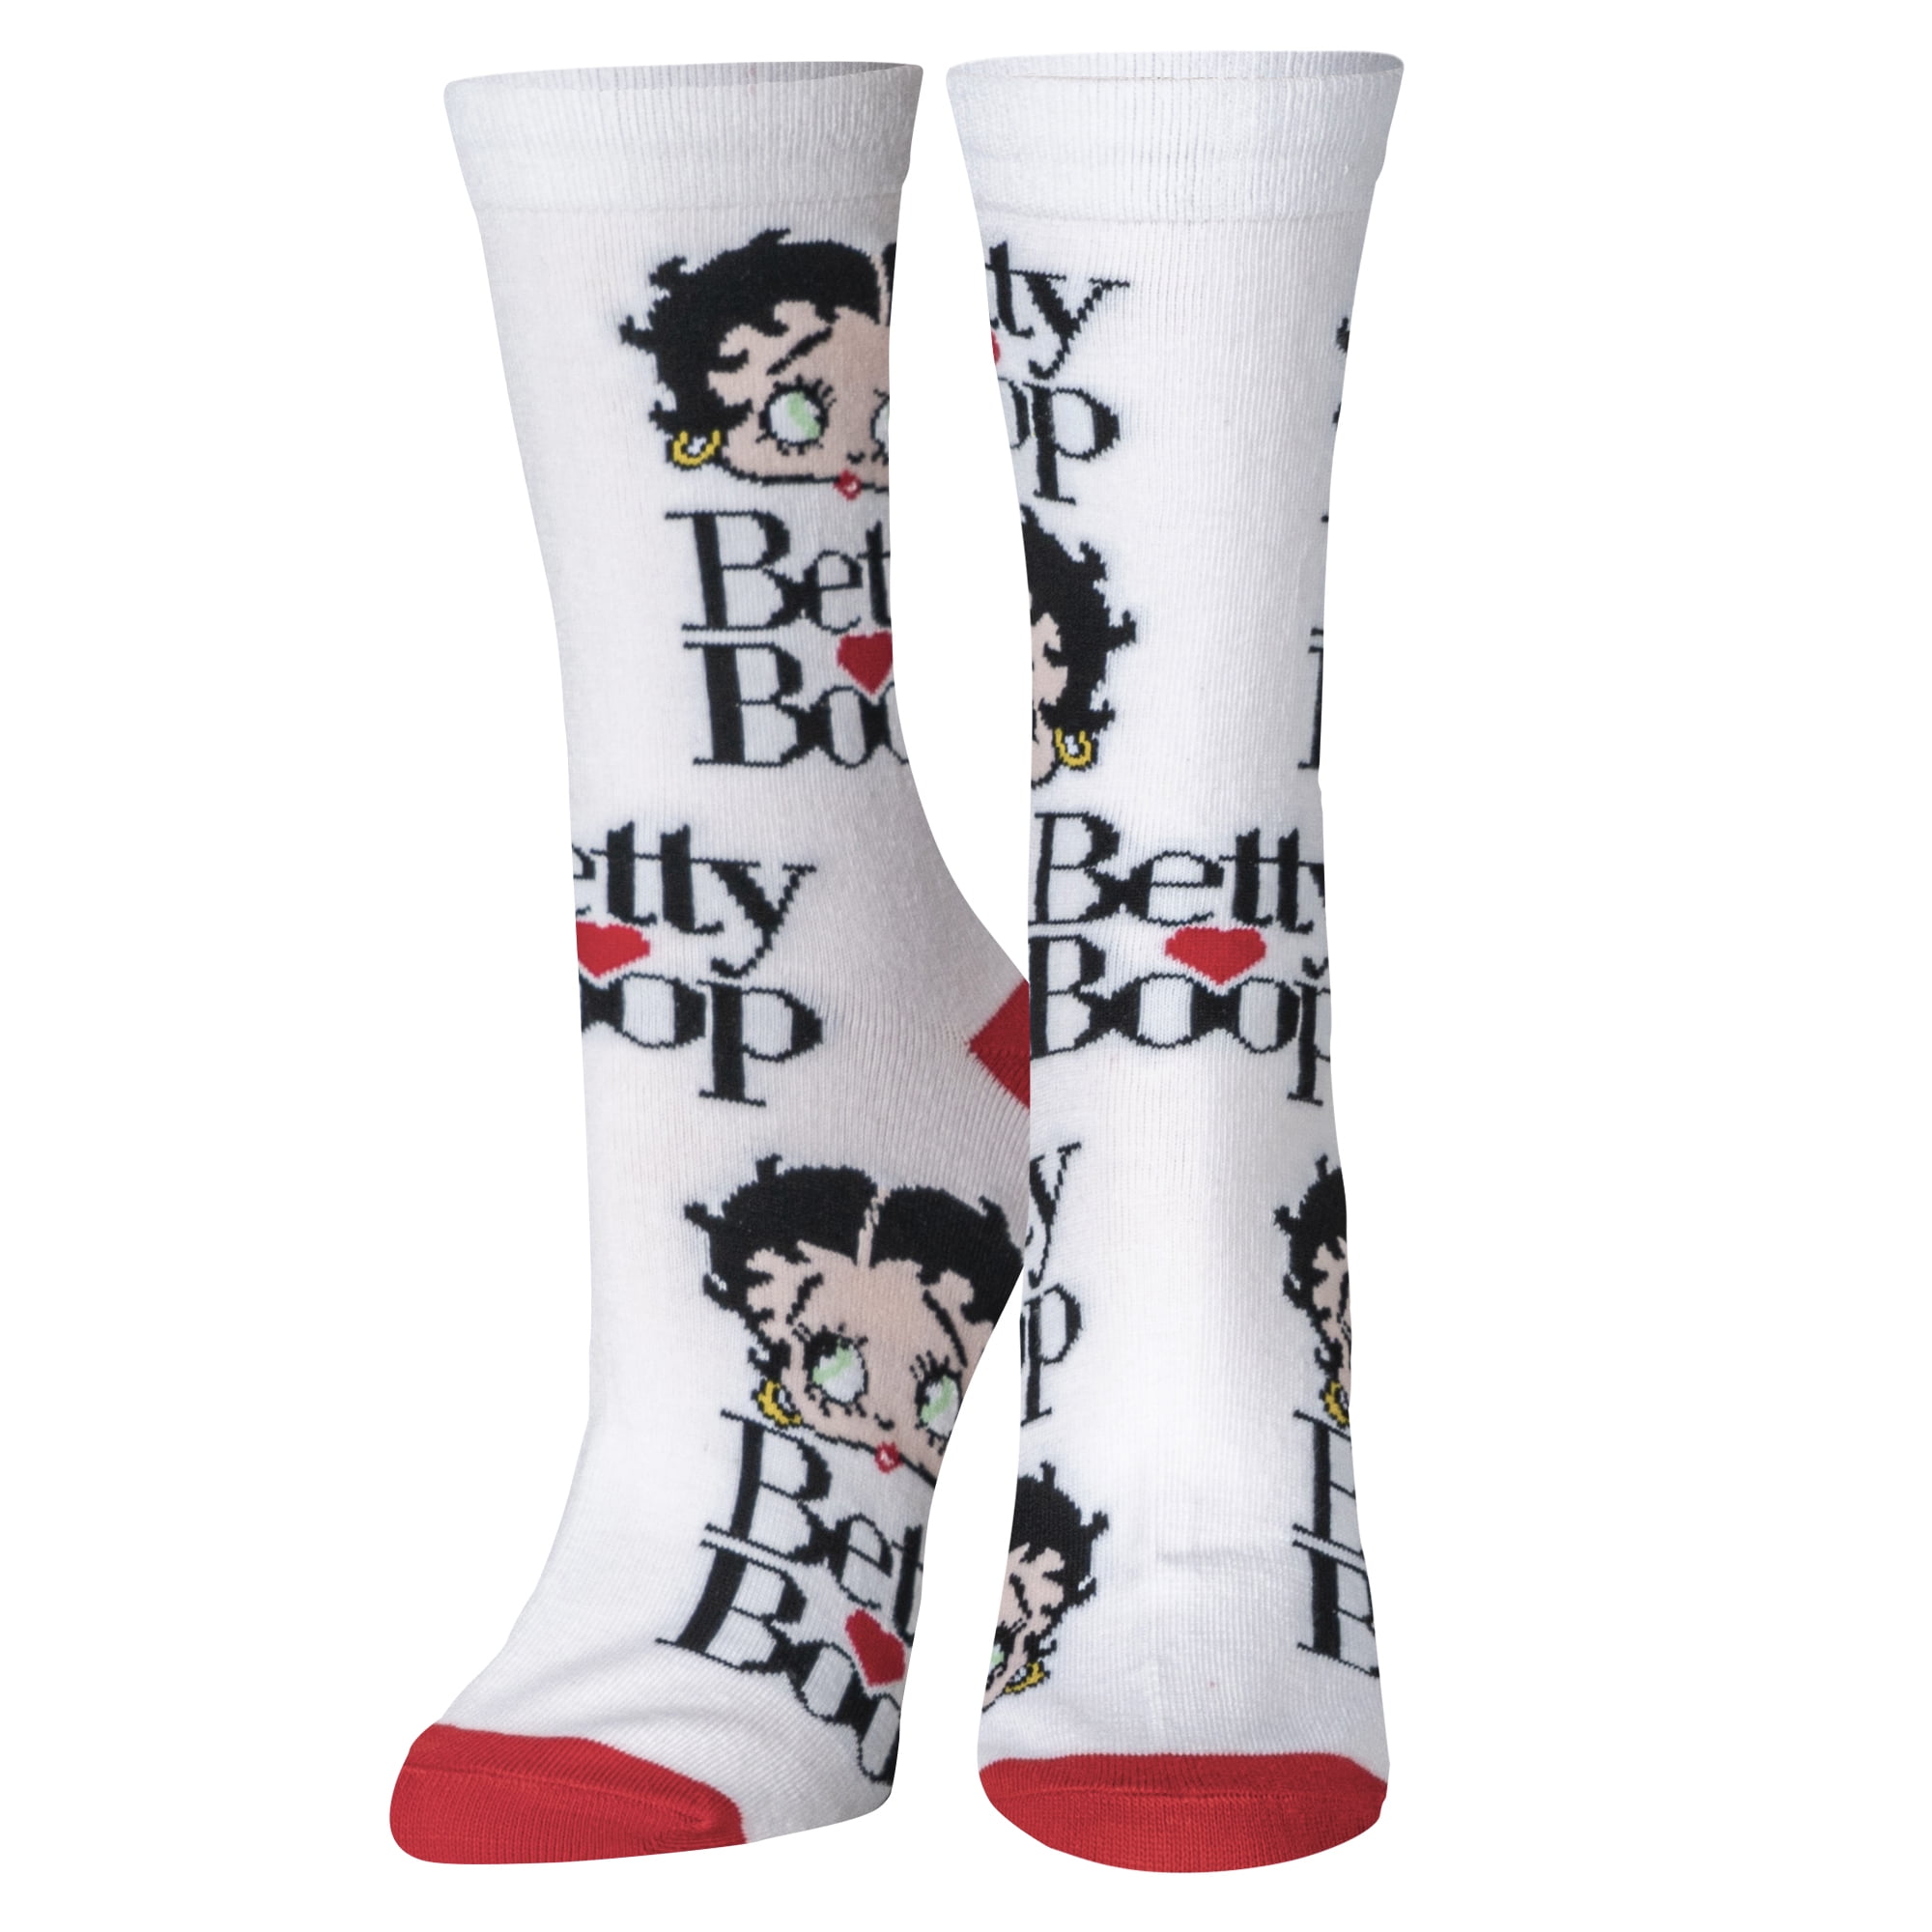 Crazy Socks Betty Boop Fun Print Novelty Crew Socks for Women - Walmart.com